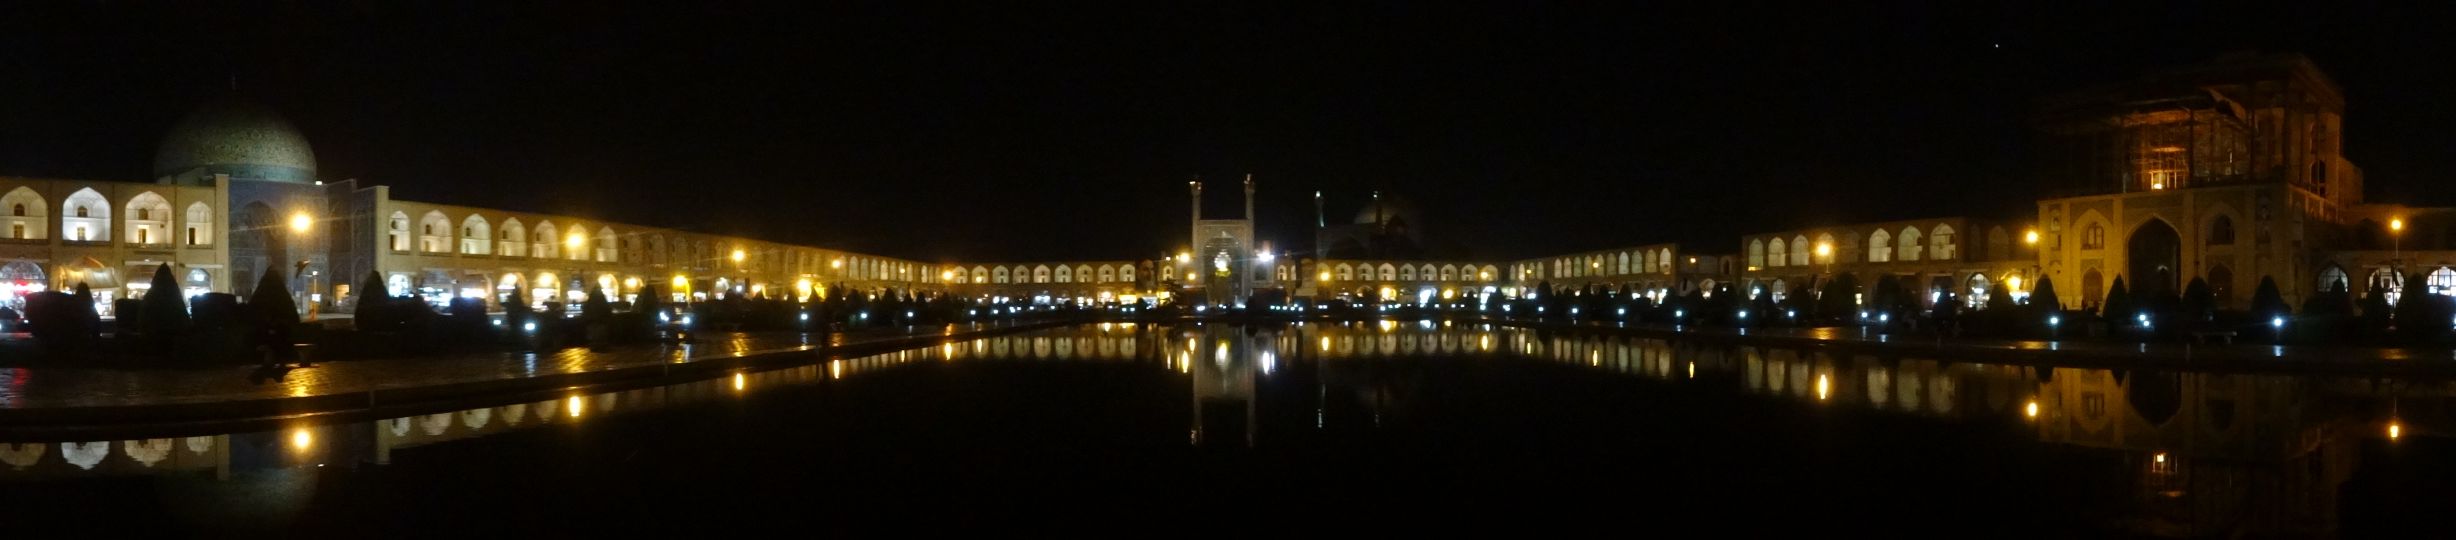 Esfehan - Imam Square reflections at night